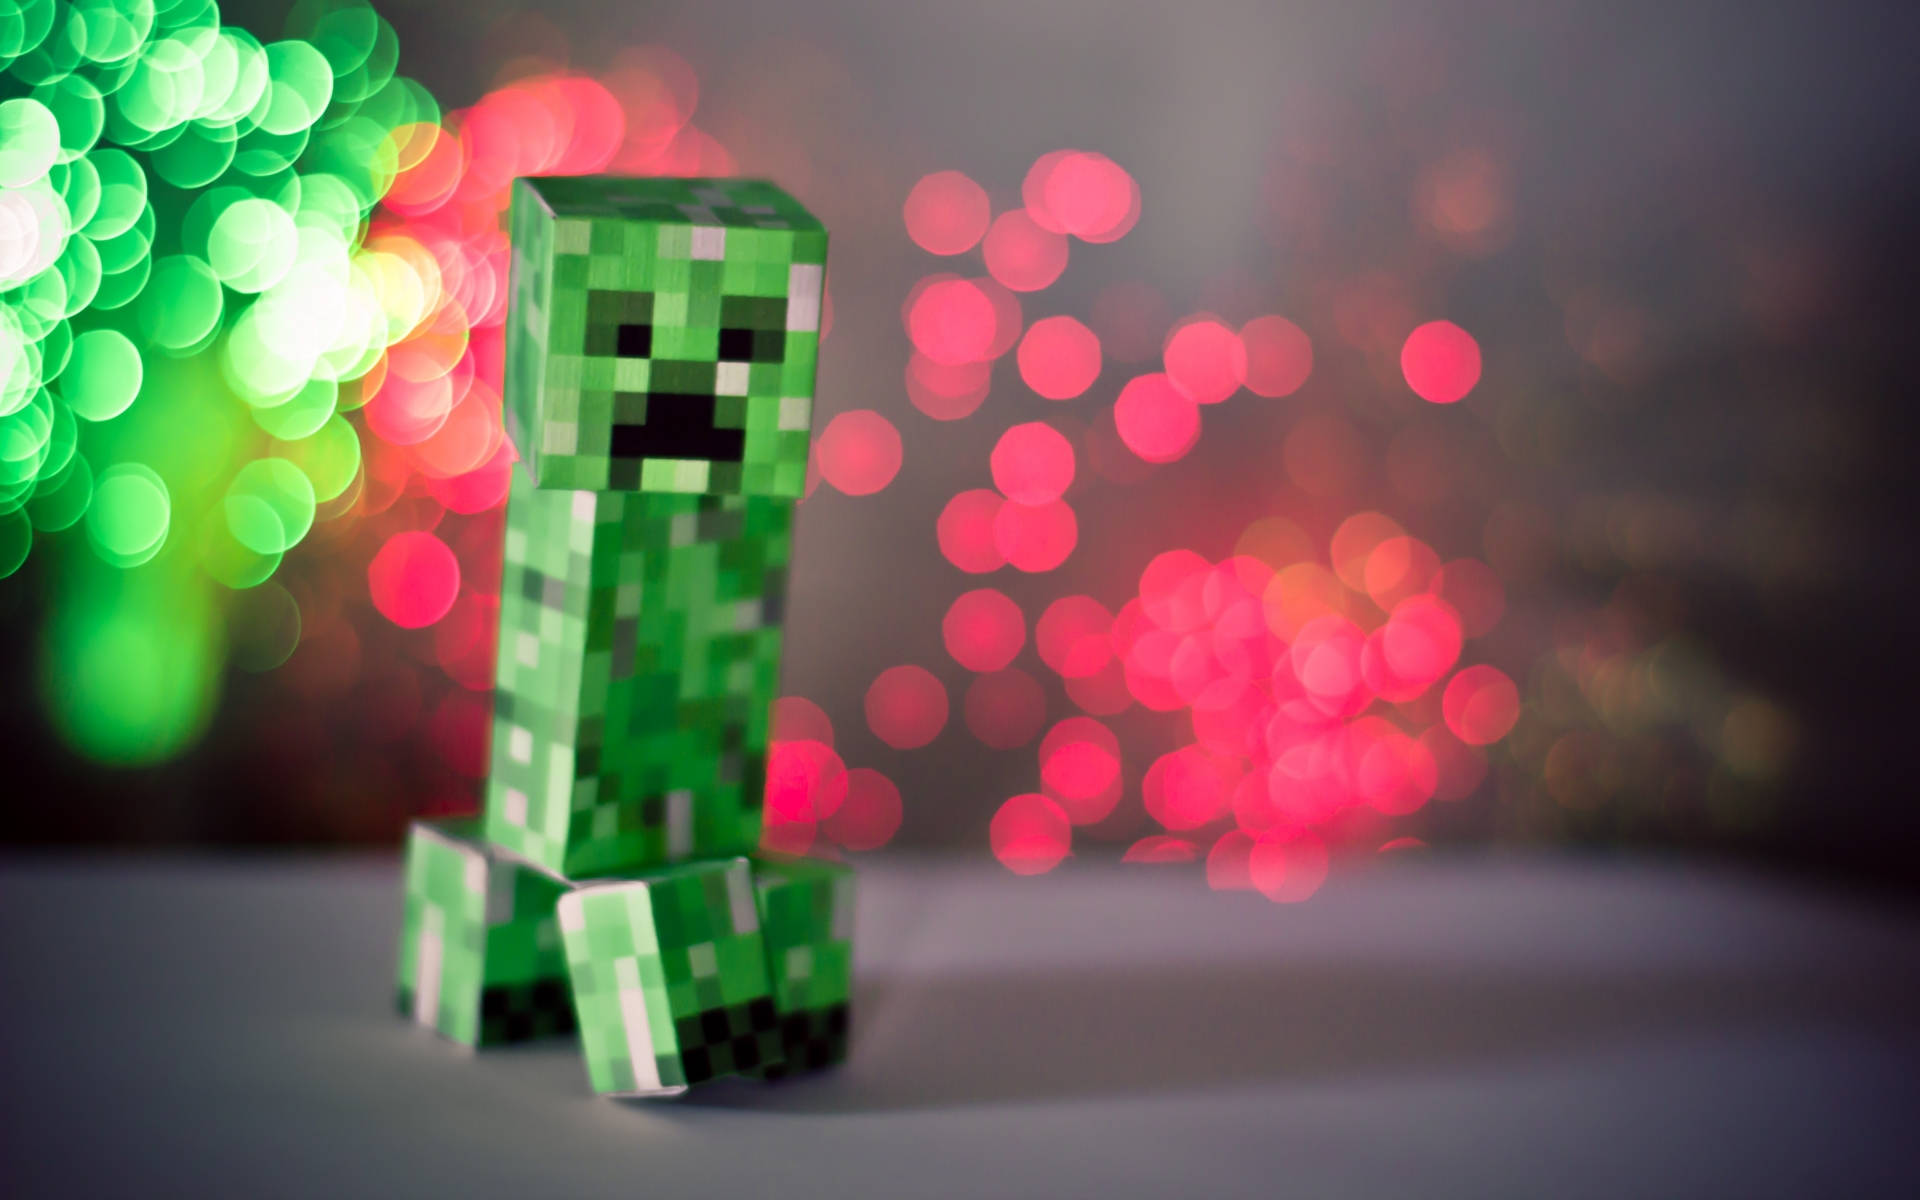 Minecraft Creeper With Blurry Lights